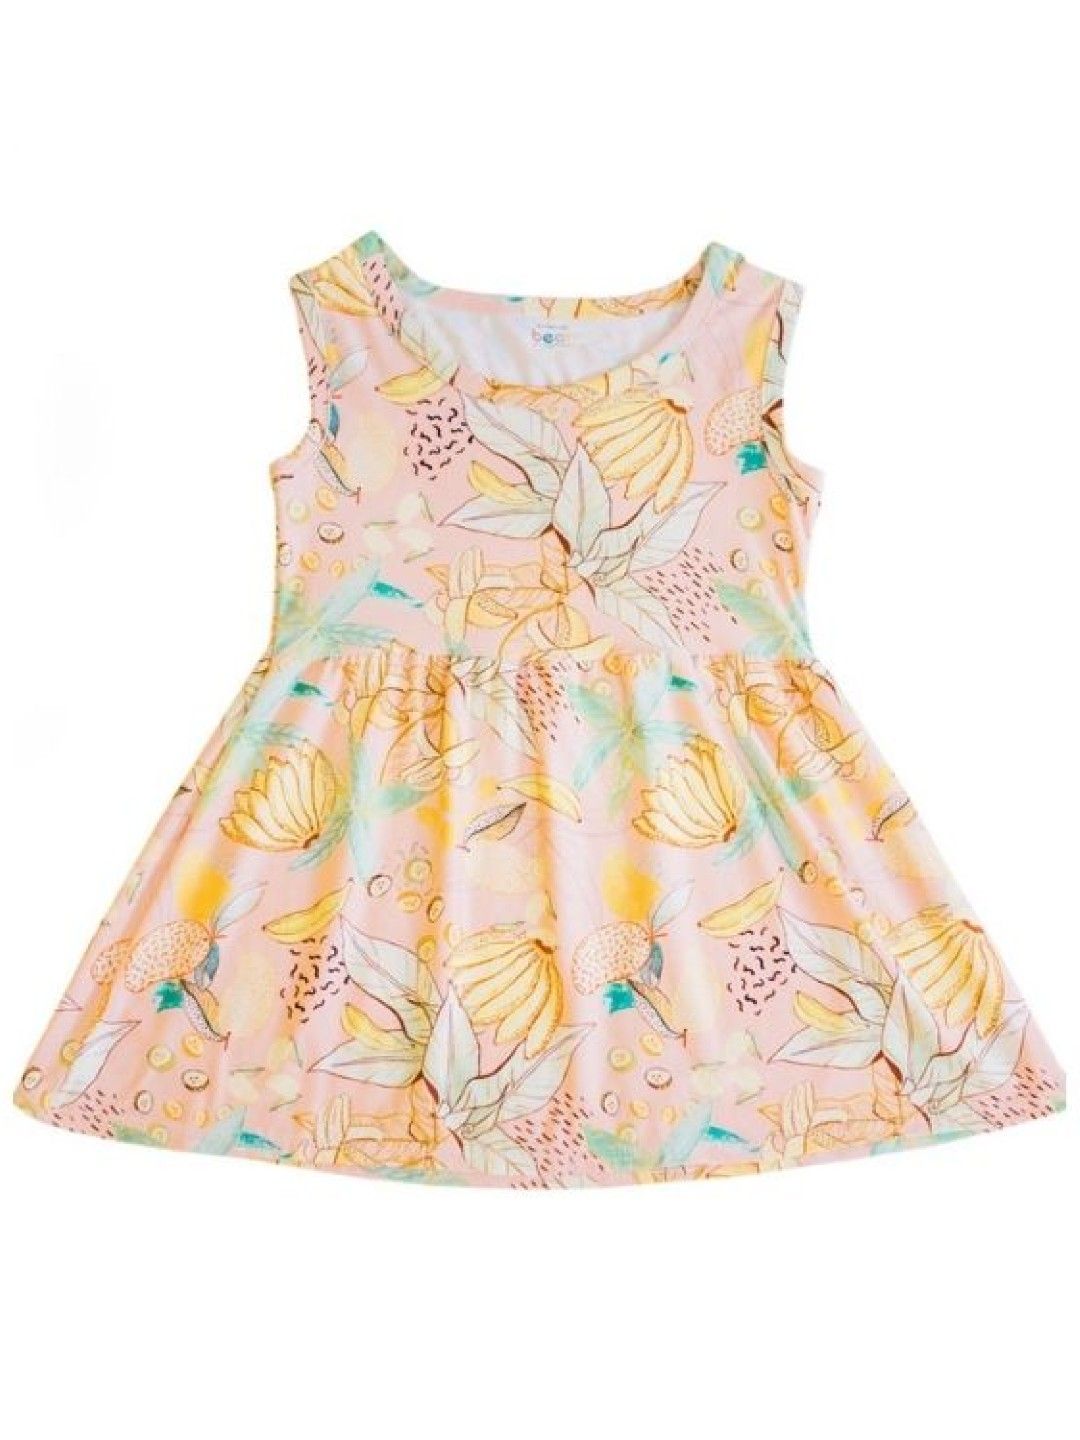 bean fashion Alessa Lanot Saging Swirl Play Sleeveless Dress (No Color- Image 1)